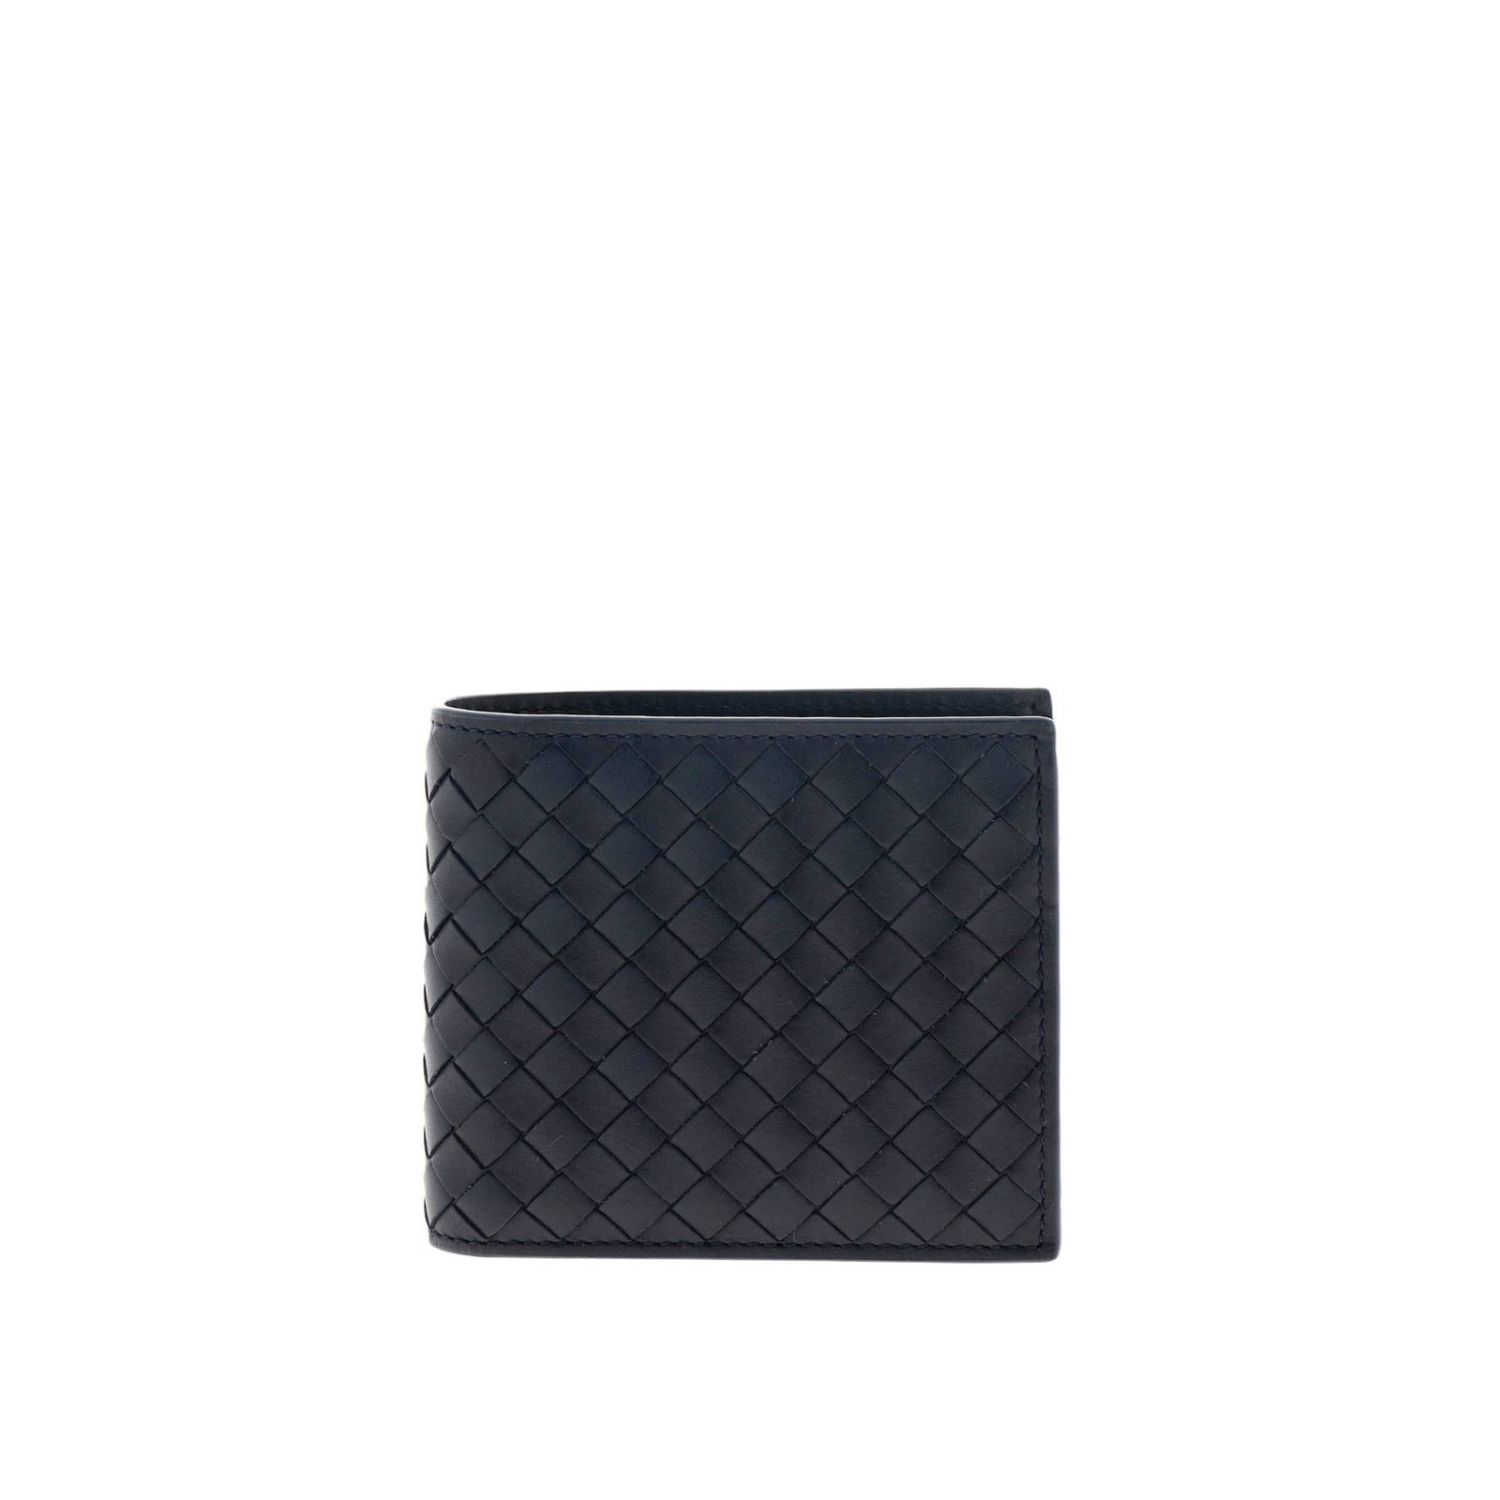 Bottega Veneta Outlet: Classic wallet in woven leather - Blue | Wallet ...